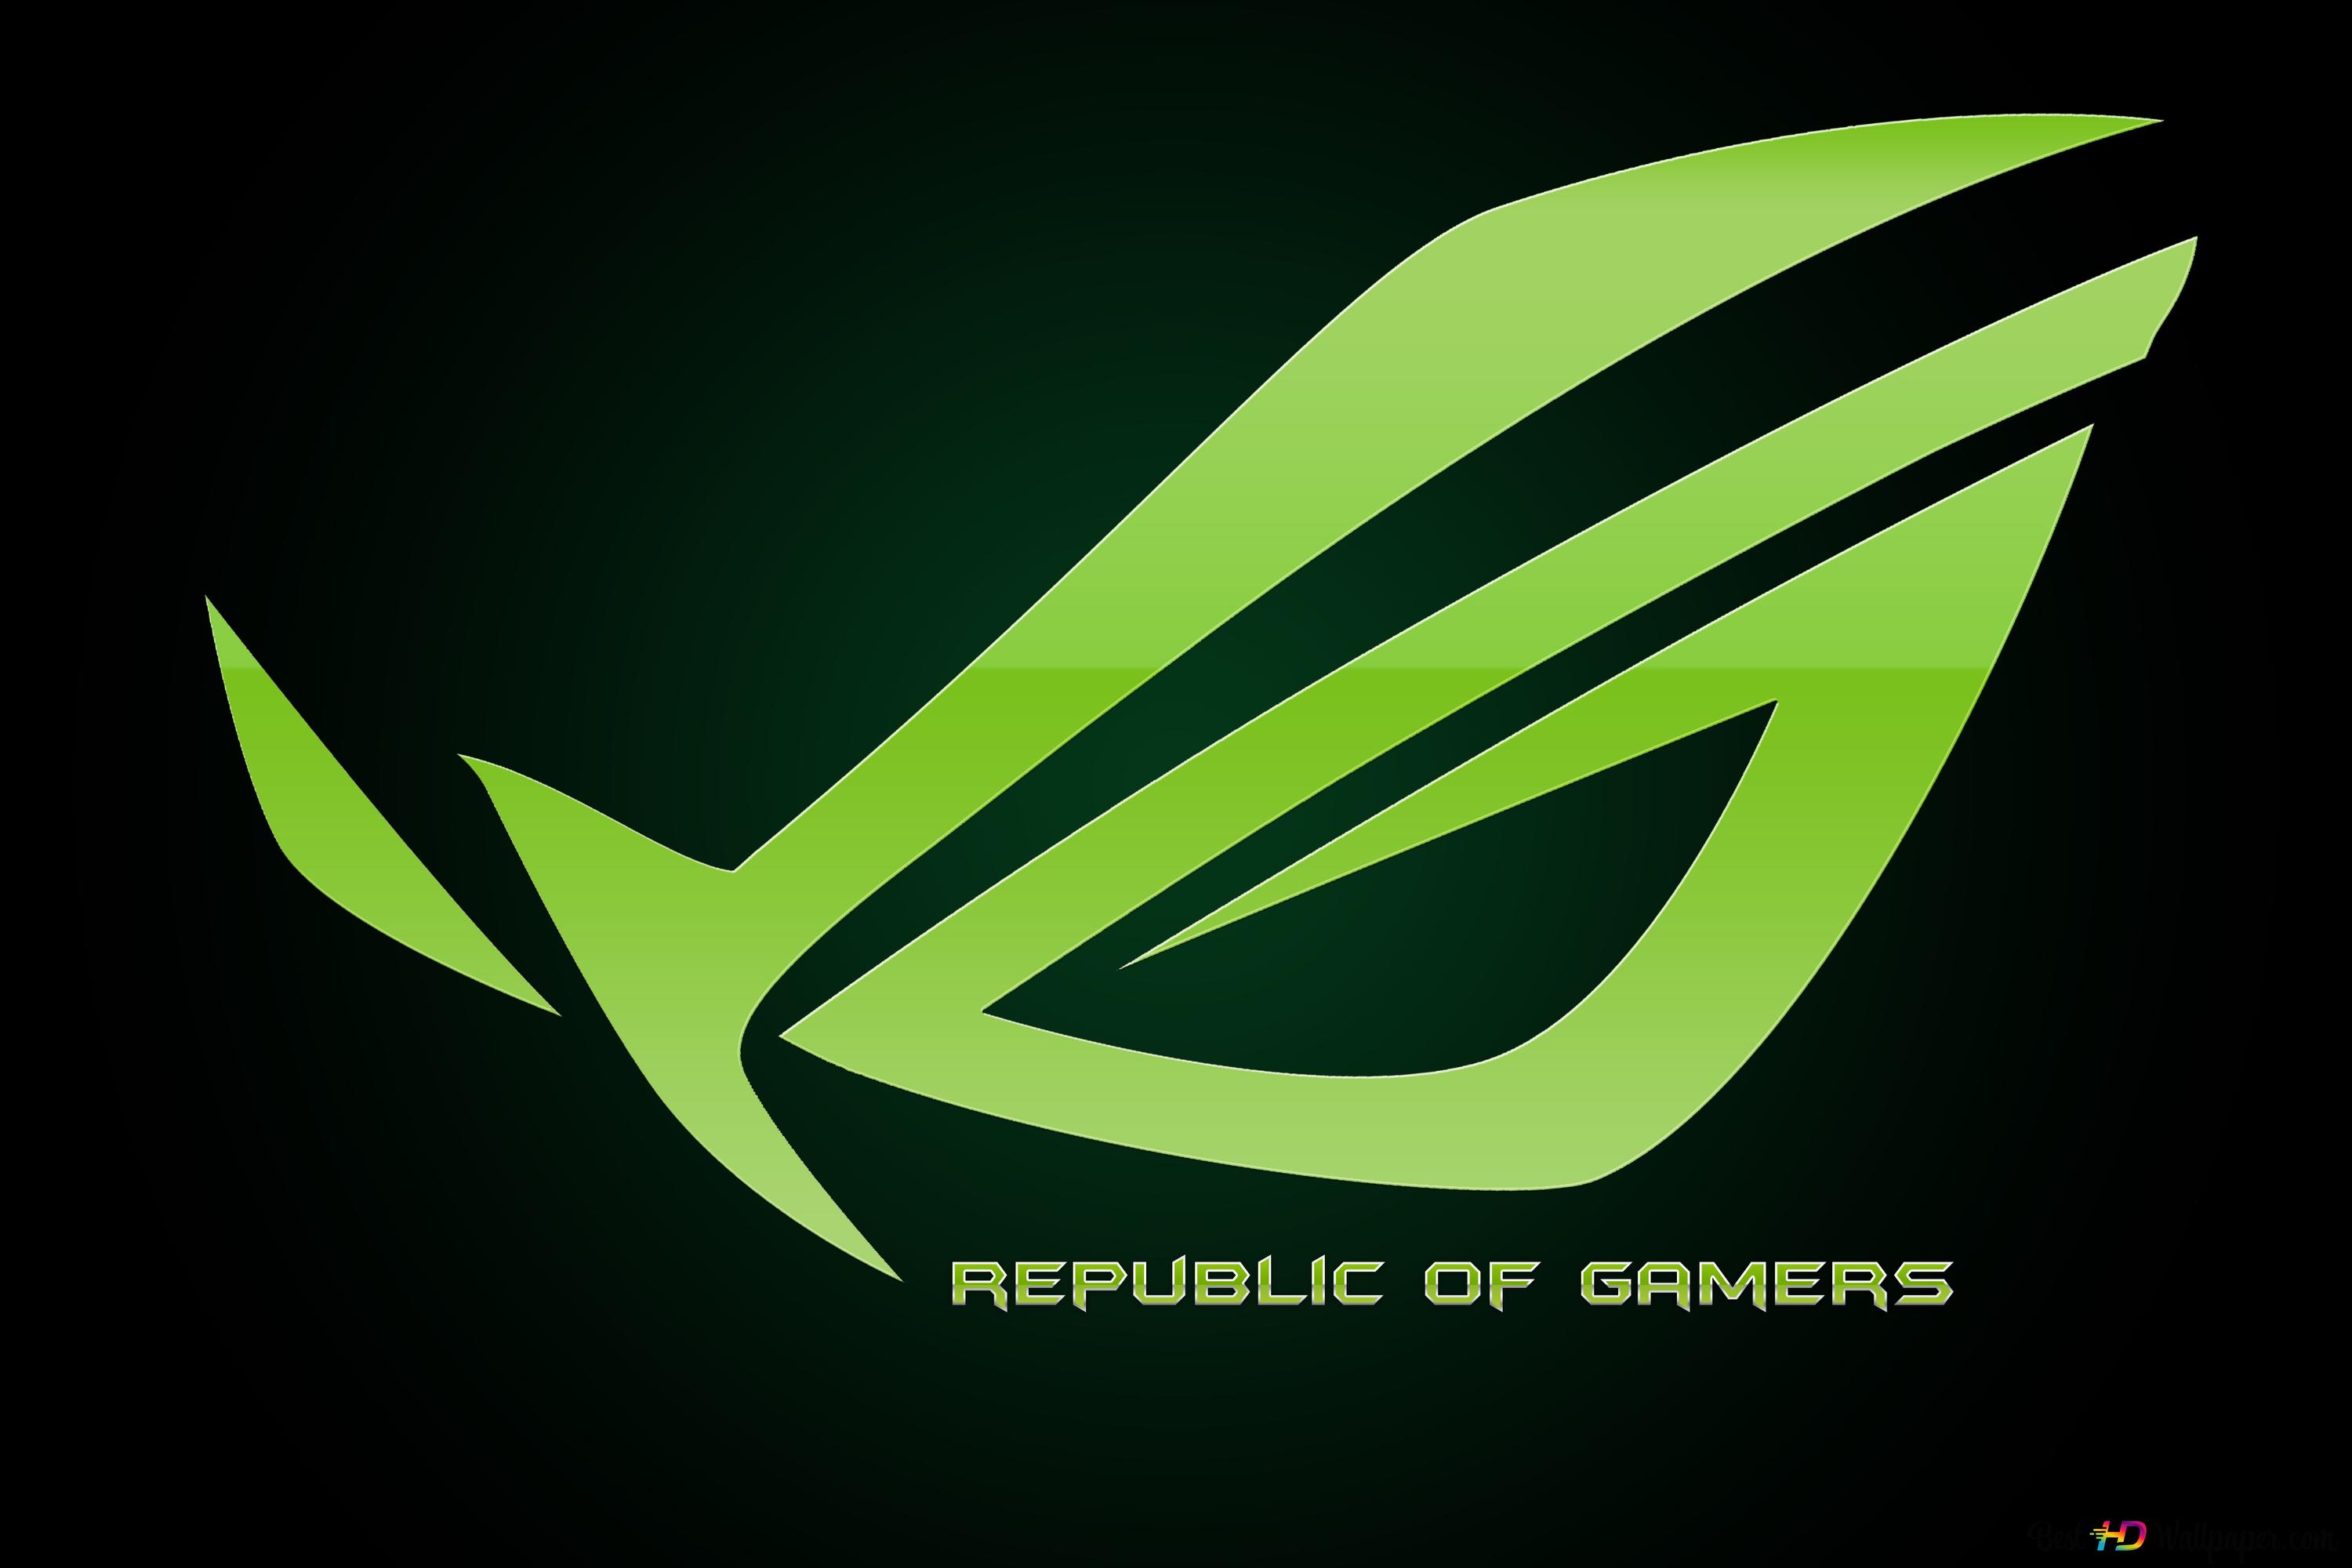 Asus ROG (Republic of Gamers) Glowing Green LOGO 4K wallpaper download